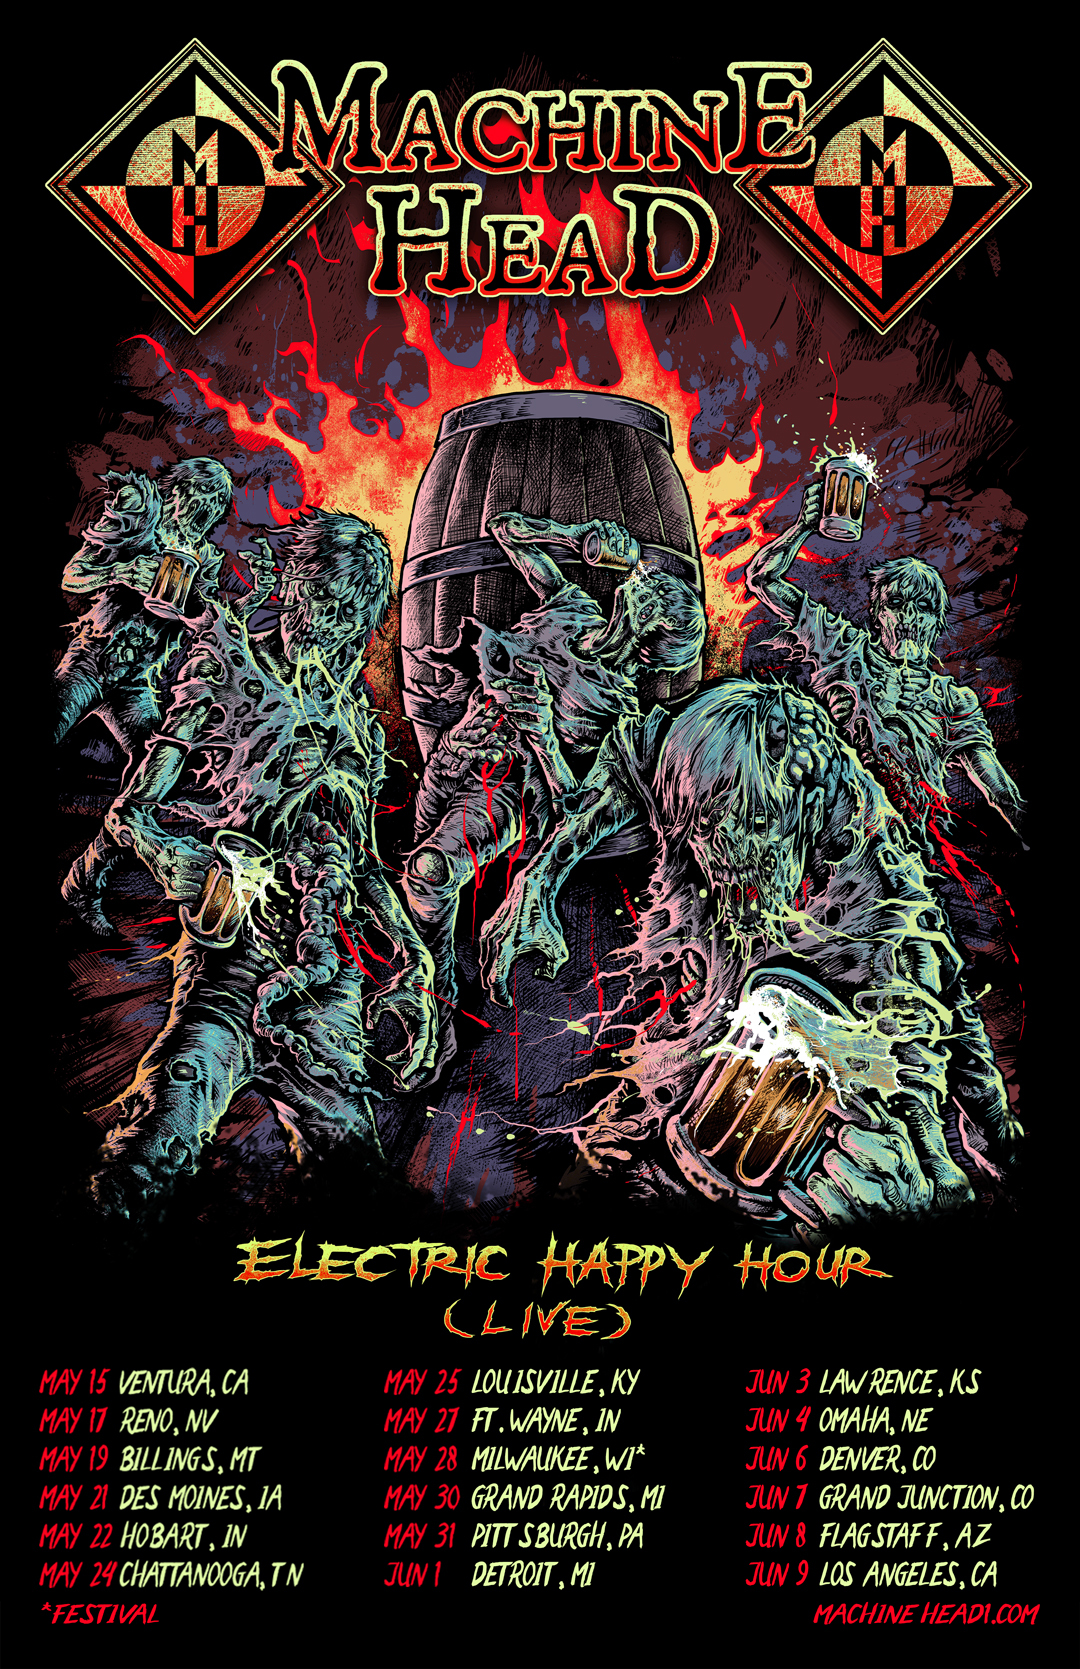 MACHINE HEAD Announces Their Electric Happy Hour (Live) Spring 2023 Tour!